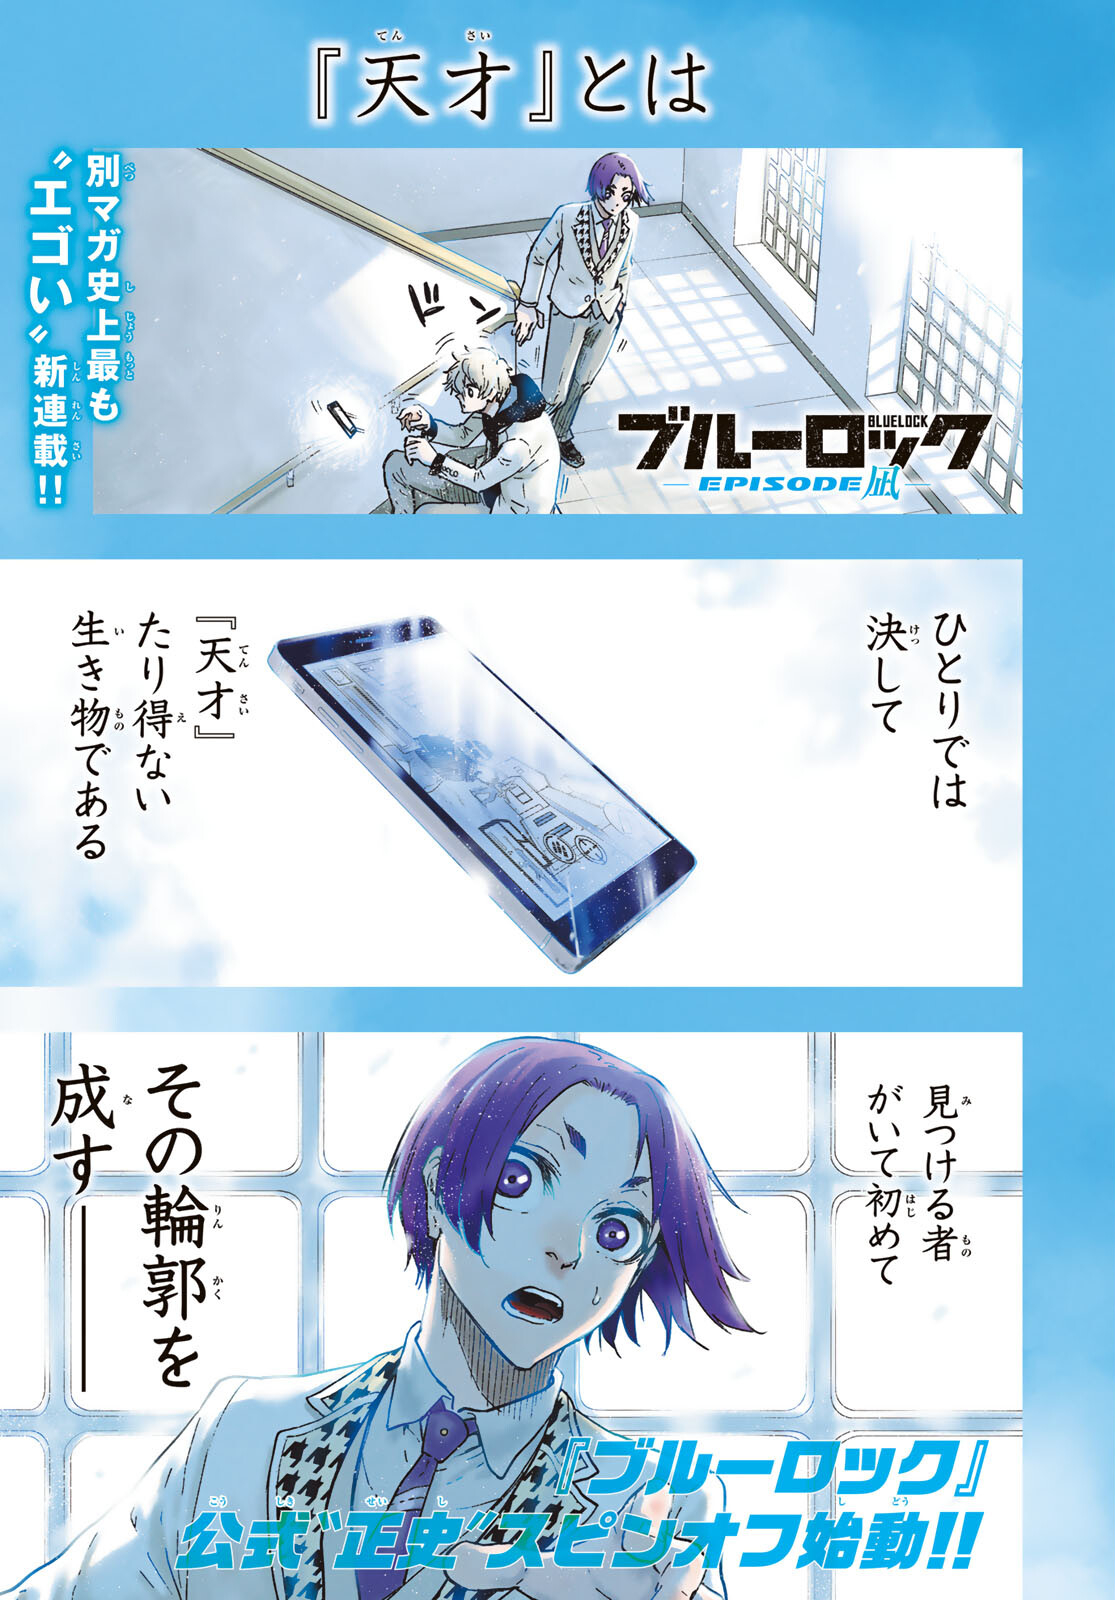 Blue Lock' Announces Second Season, Cinematic Adaptation Of Spin-Off Manga ' Episode Nagi' - Bounding Into Comics